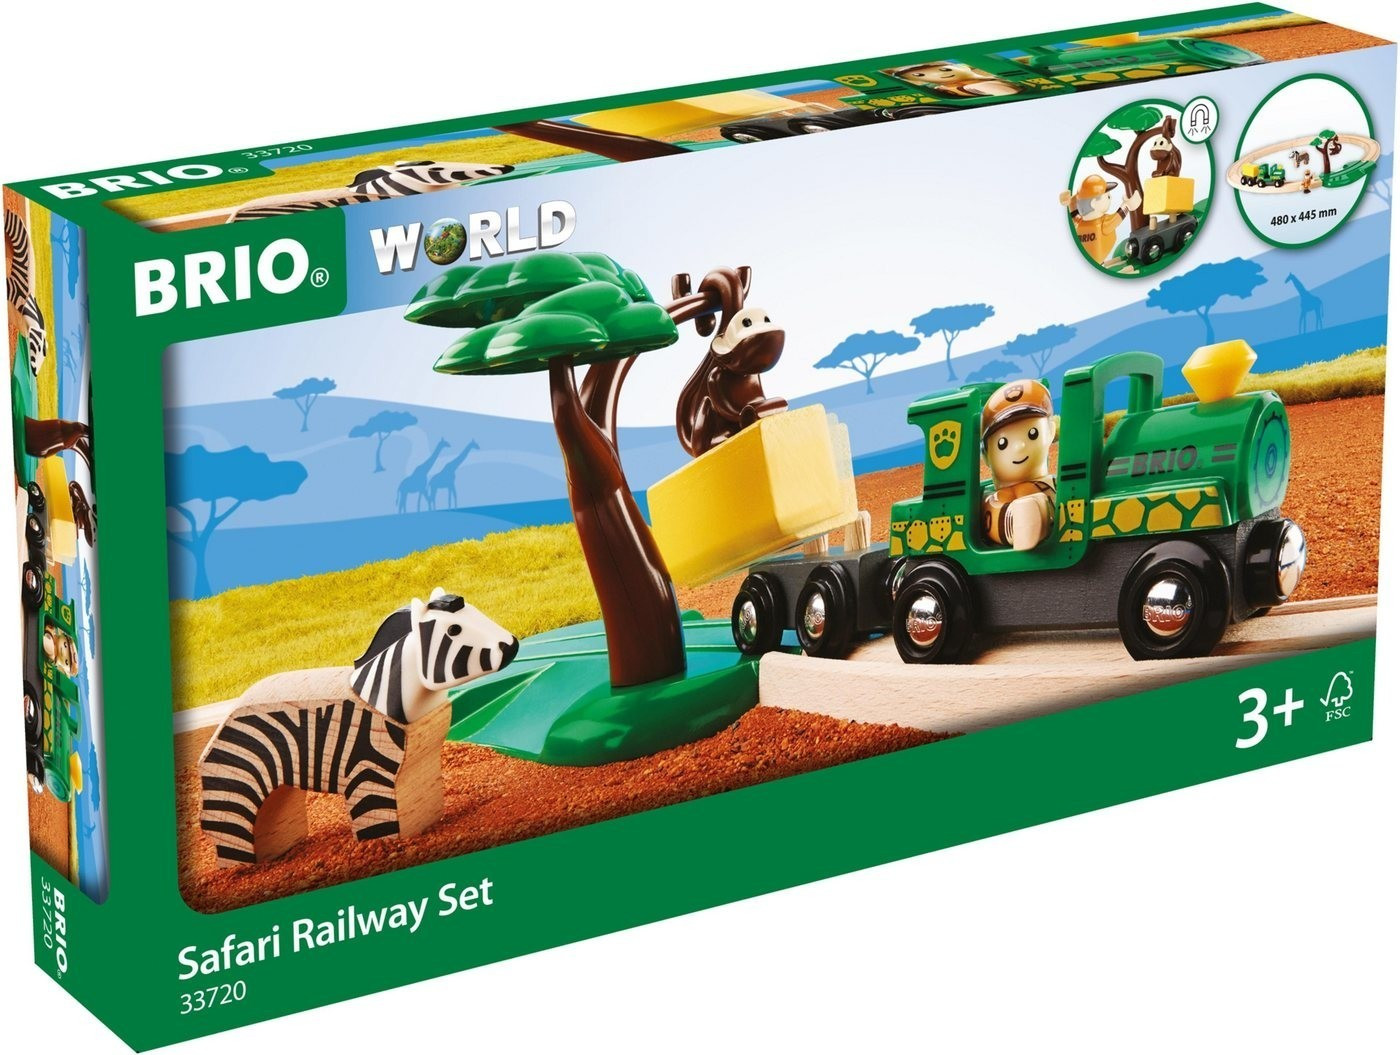 Brio Safari Railway Set (33720)